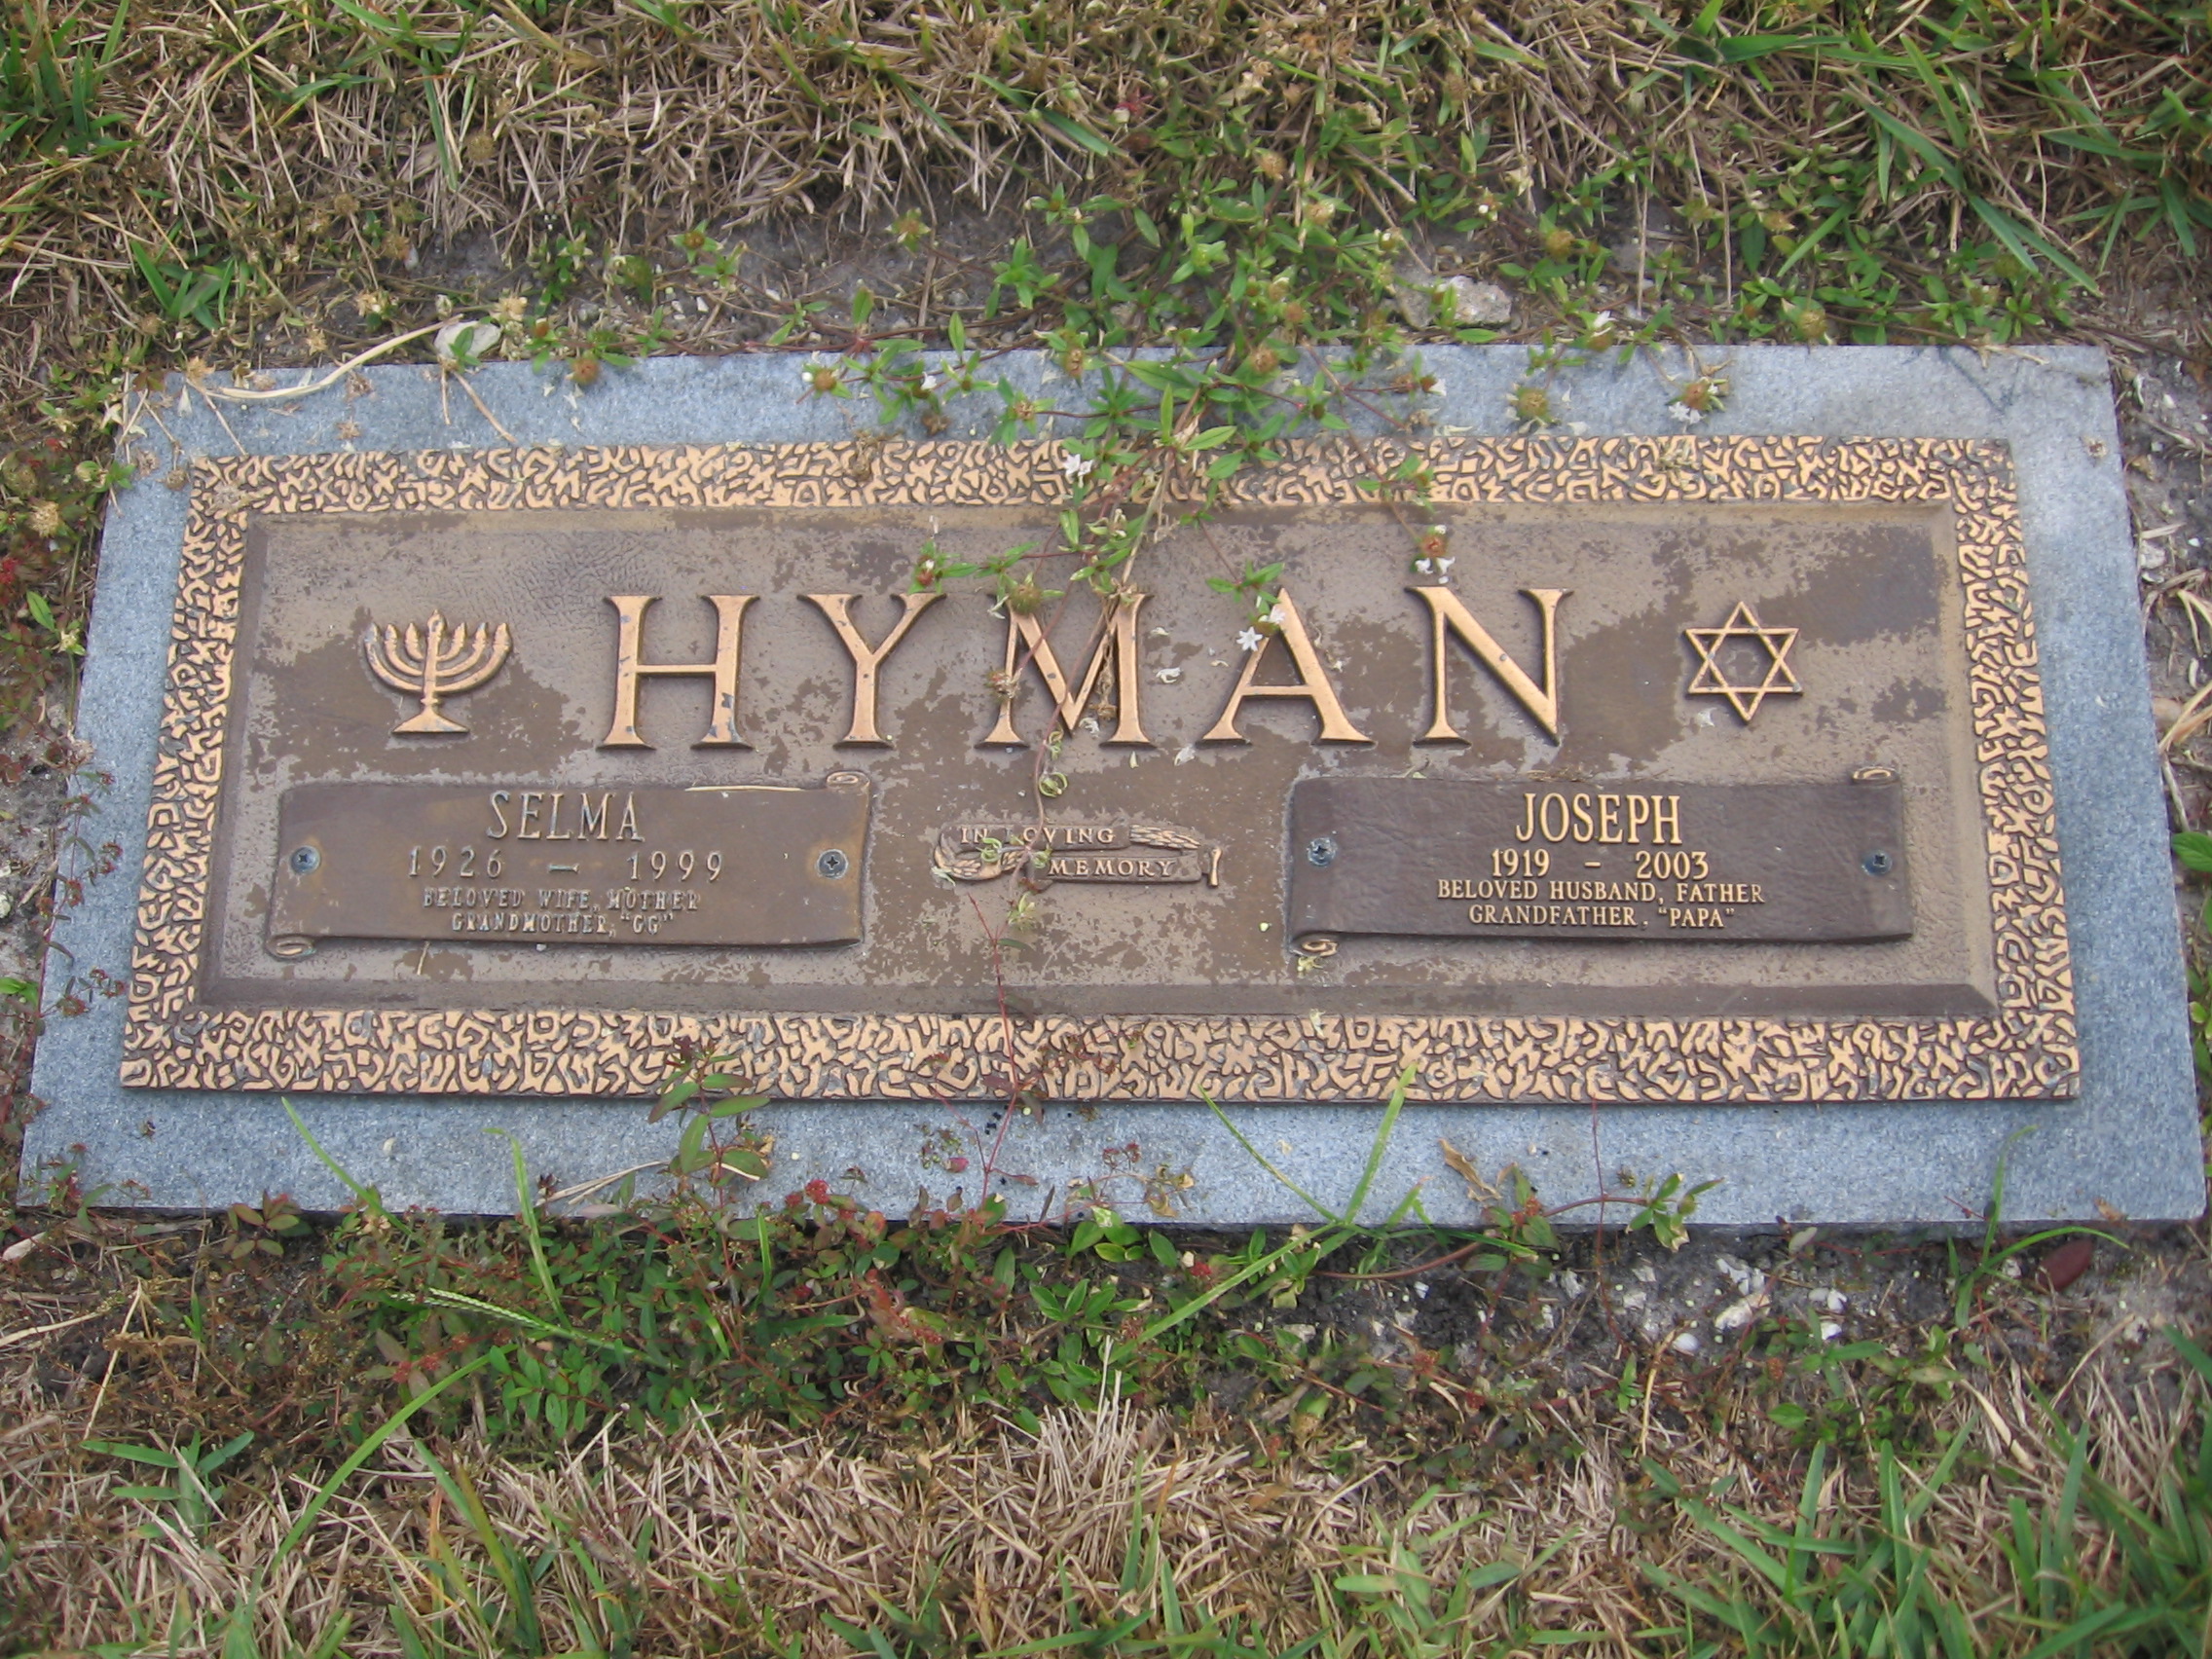 Joseph Hyman